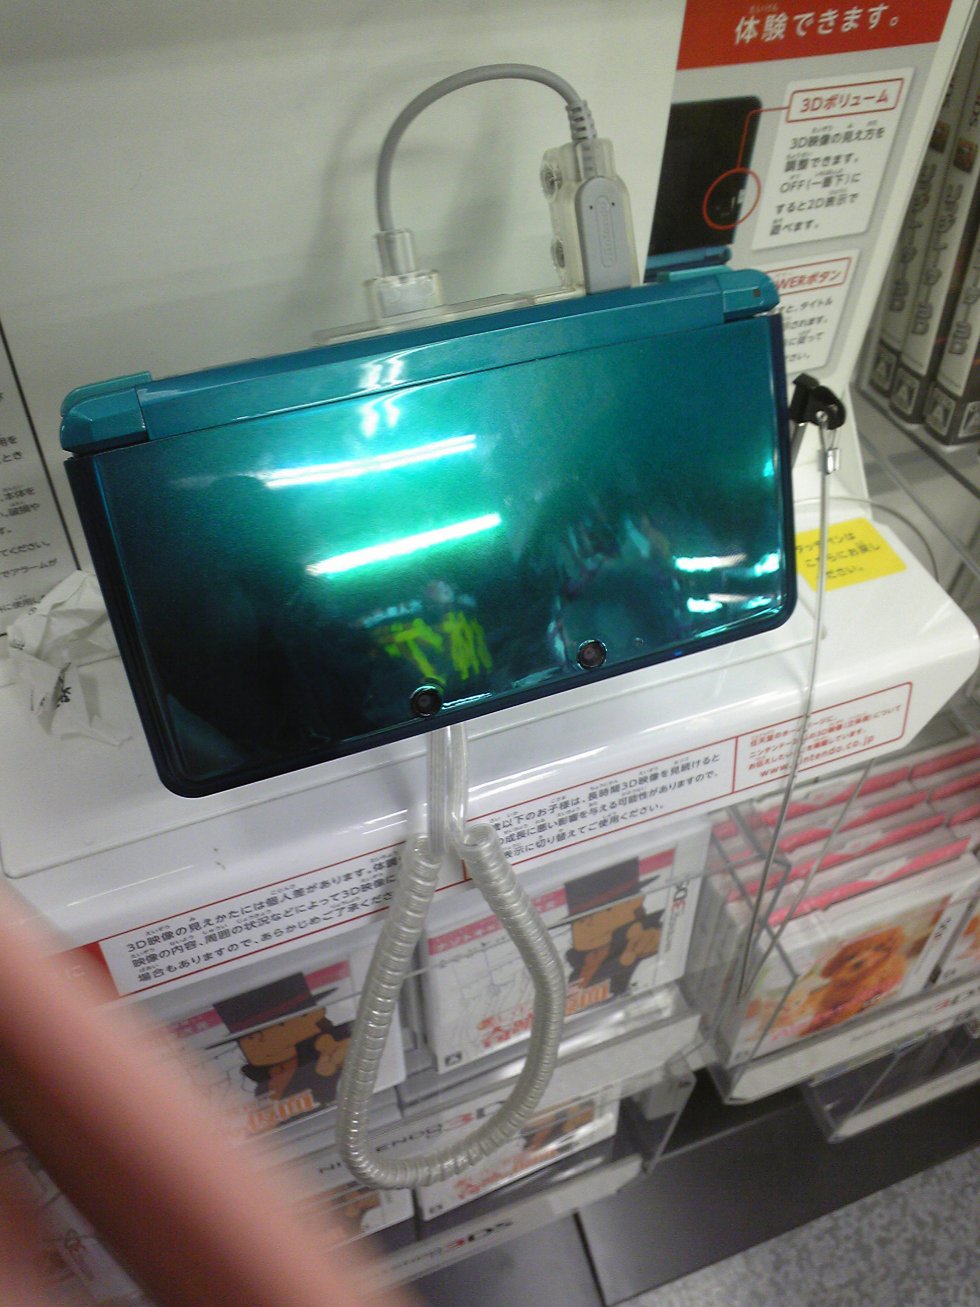 Nintendo 3DS japon test preview fevrier 2011 (13)